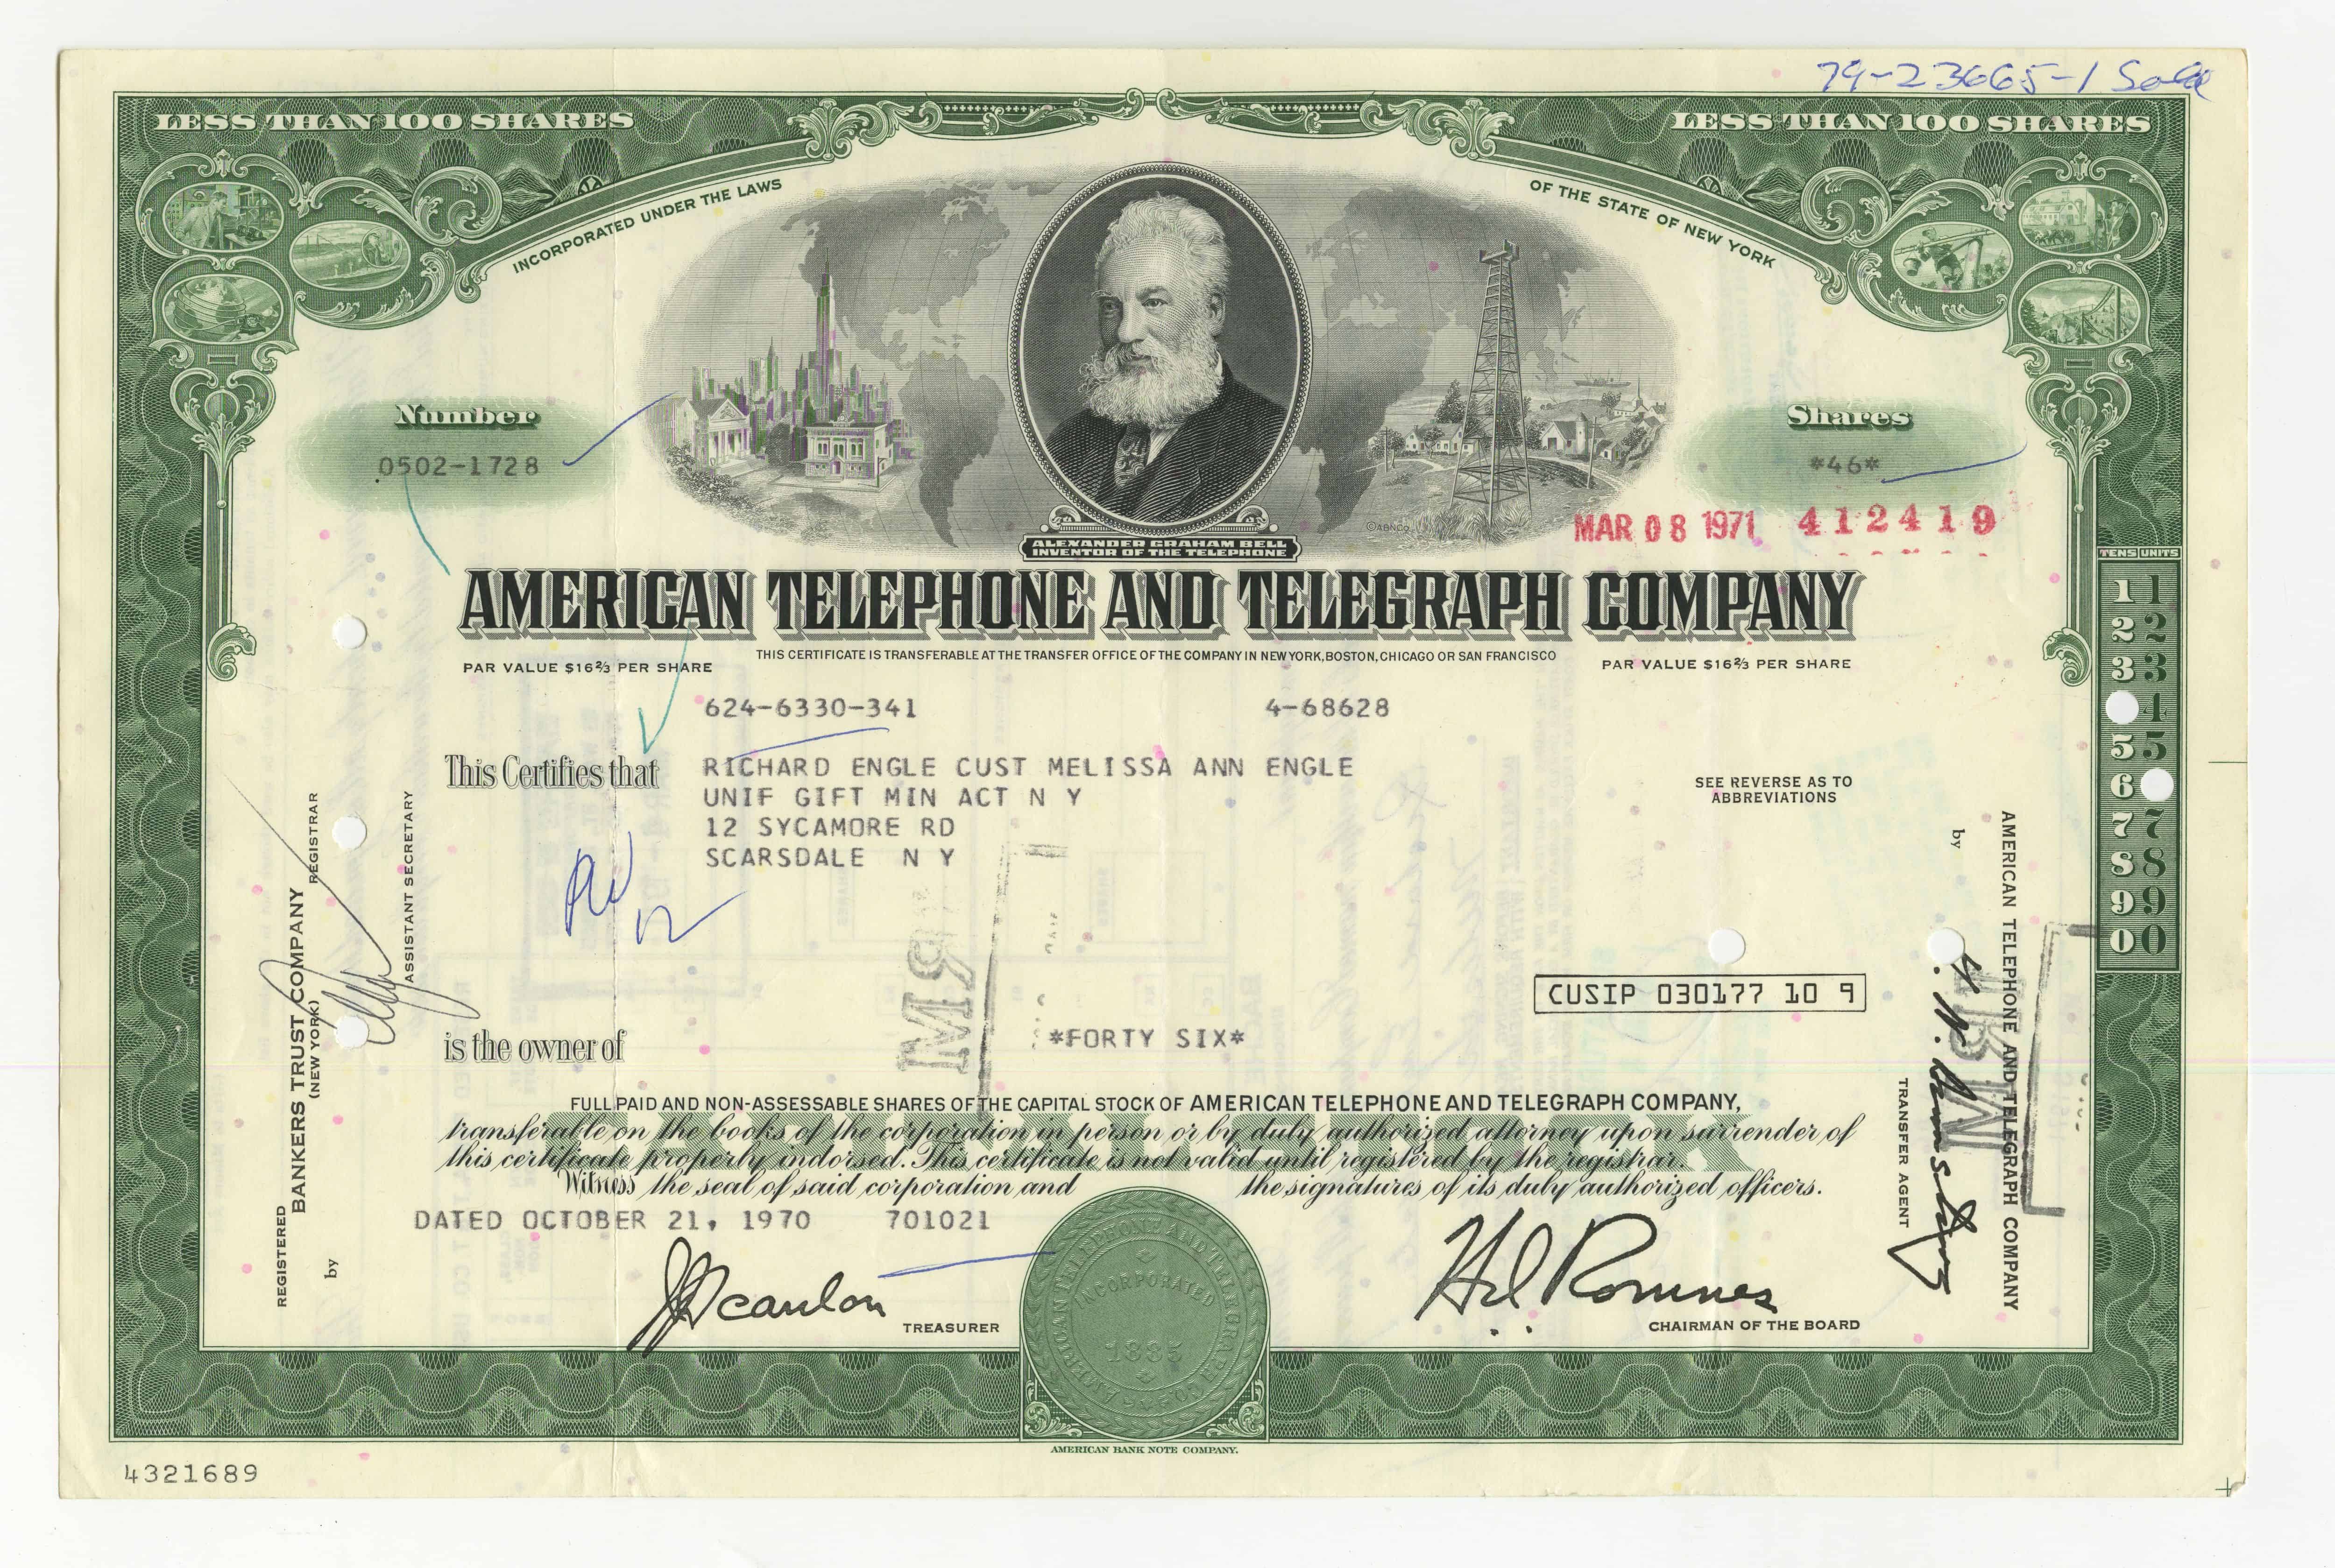 46 akcji spółki American Telephone and Telegraph Company z dnia 21 października 1970 roku